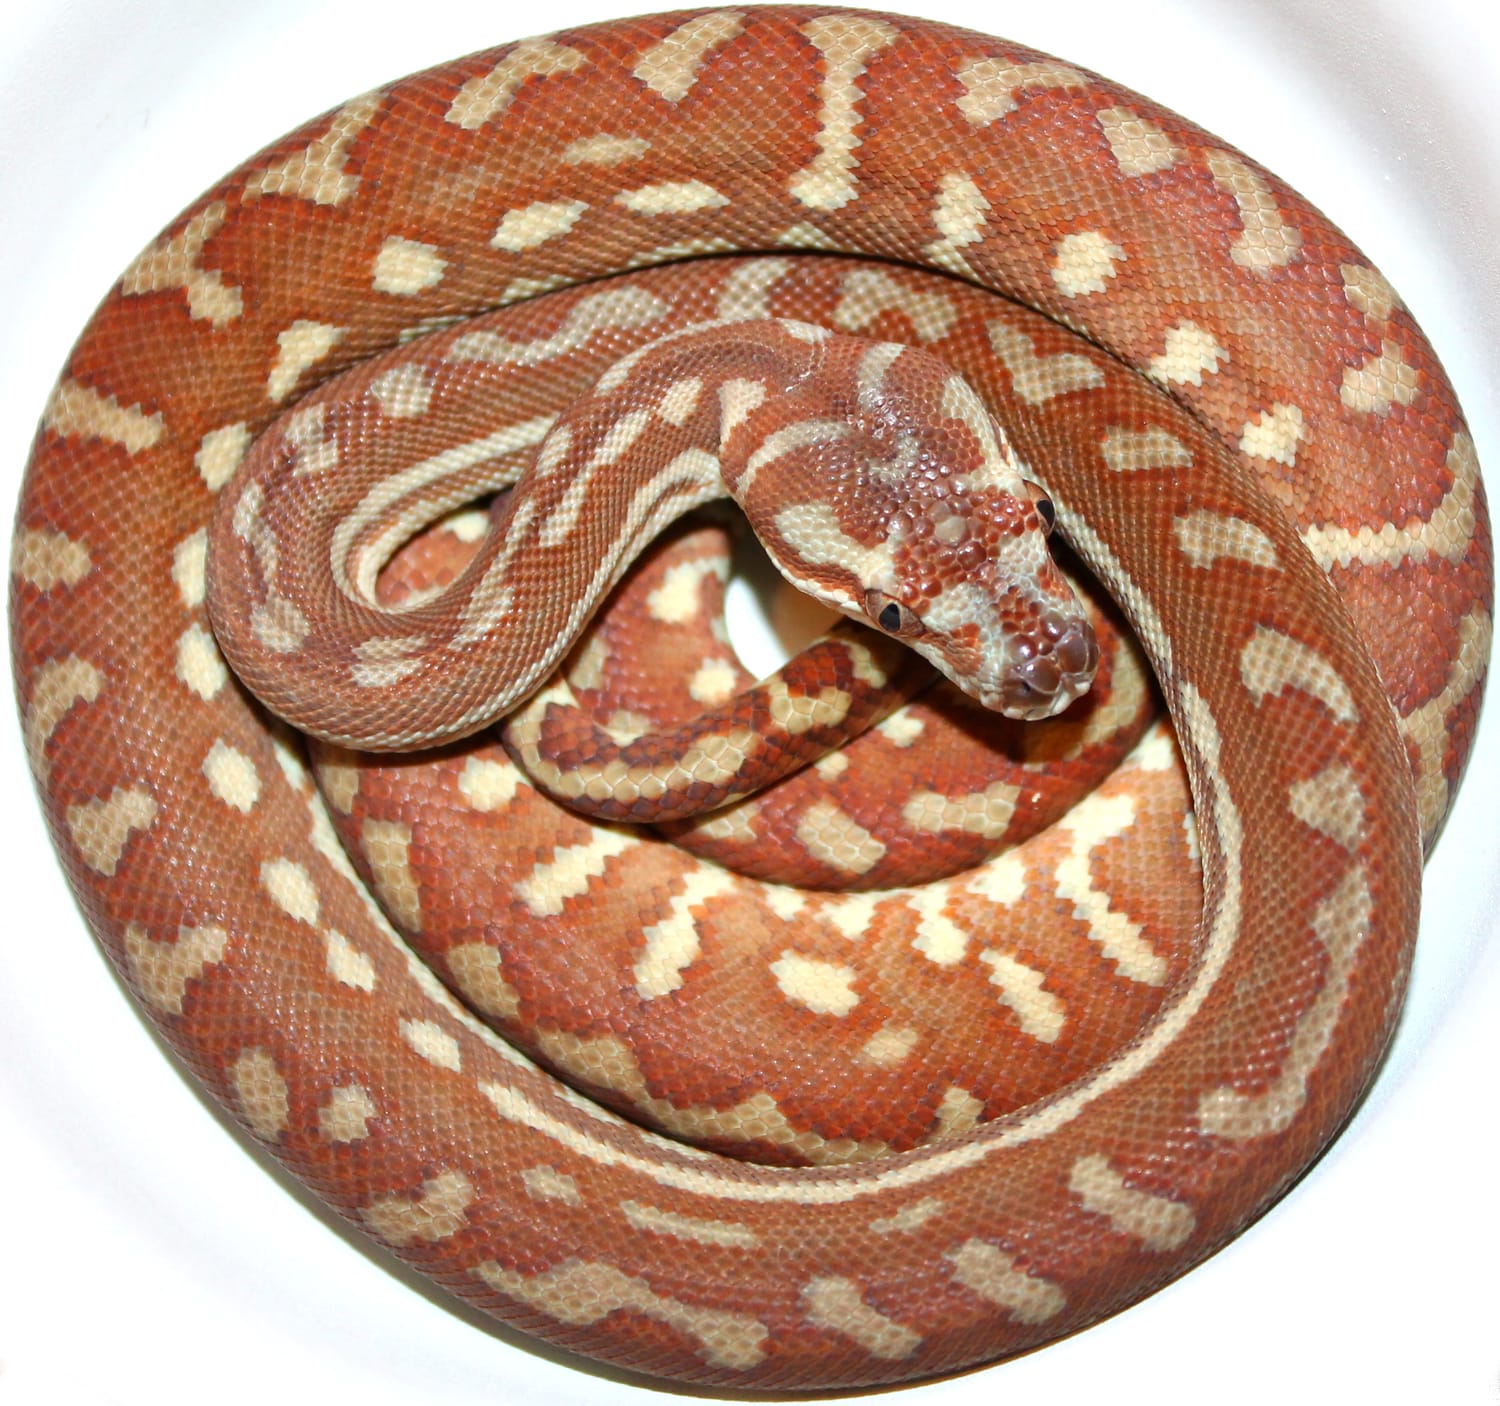 Hypo 66% Het Stripe Centralian Carpet Python by Inland Reptile